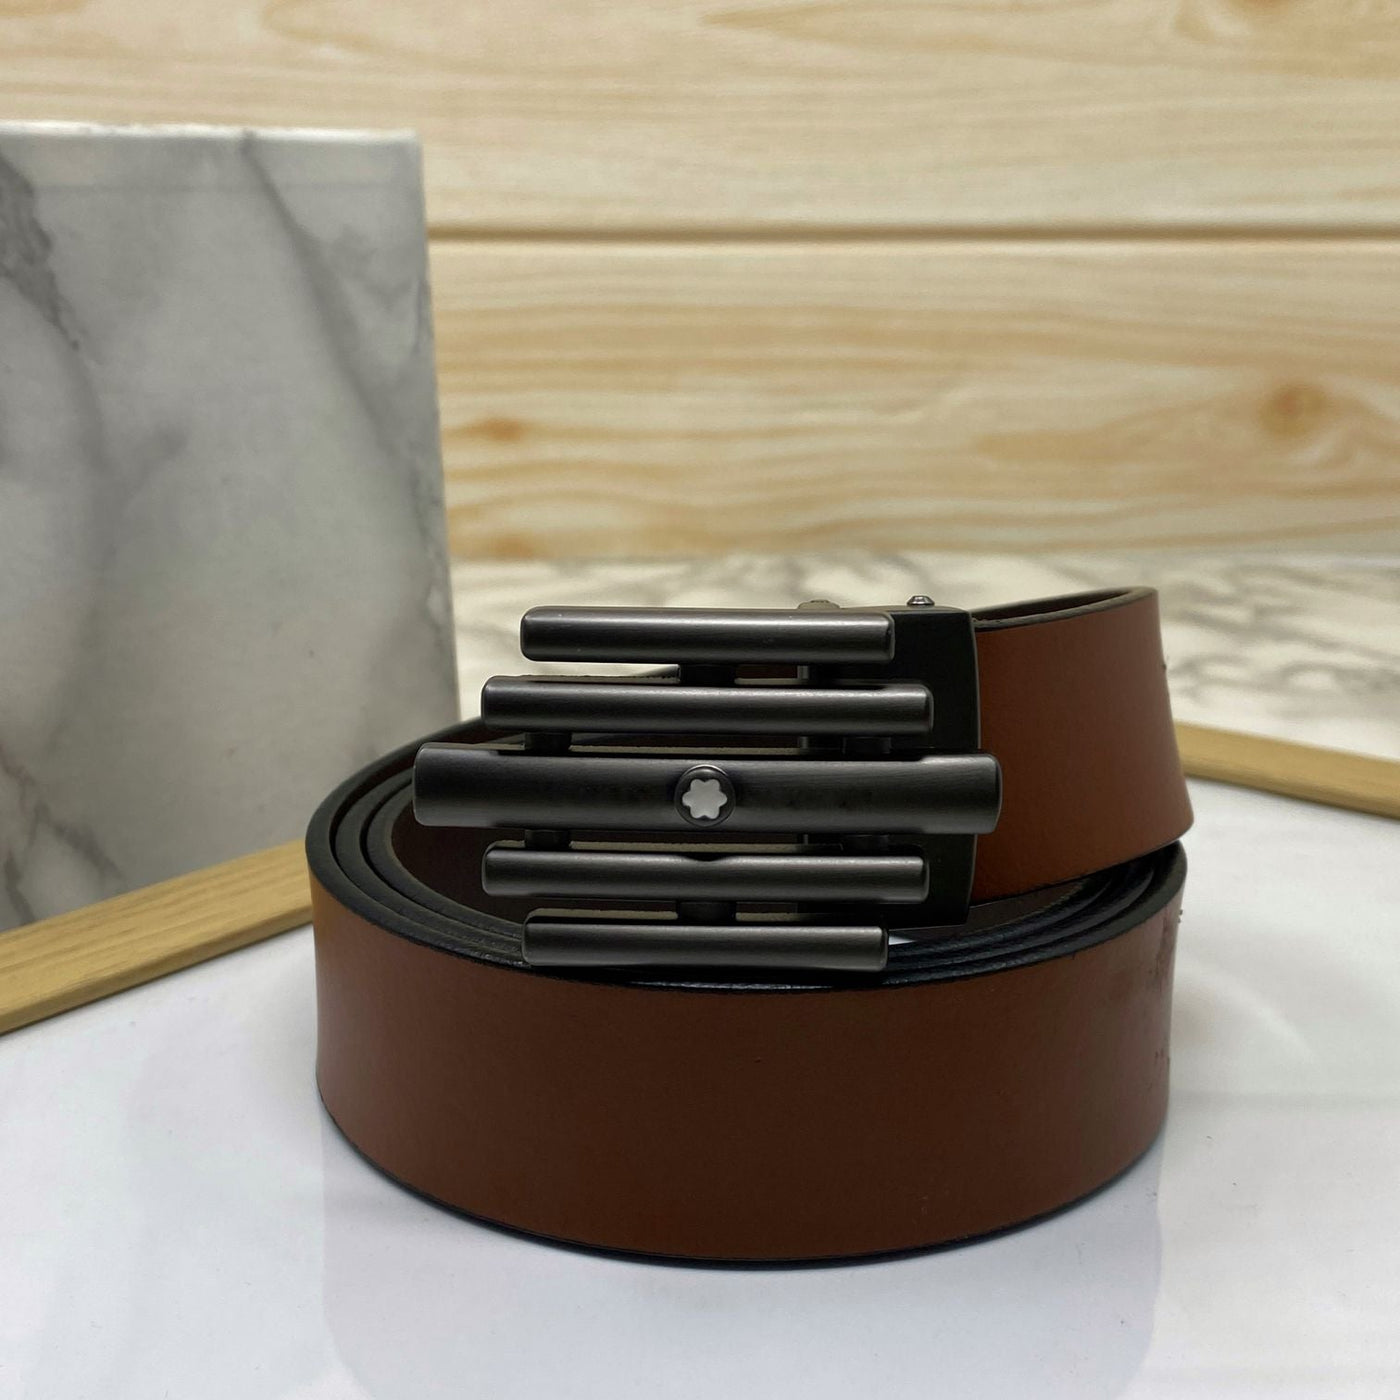 Stylish Formal Leather Strap Belt For Men-UniqueandClassy